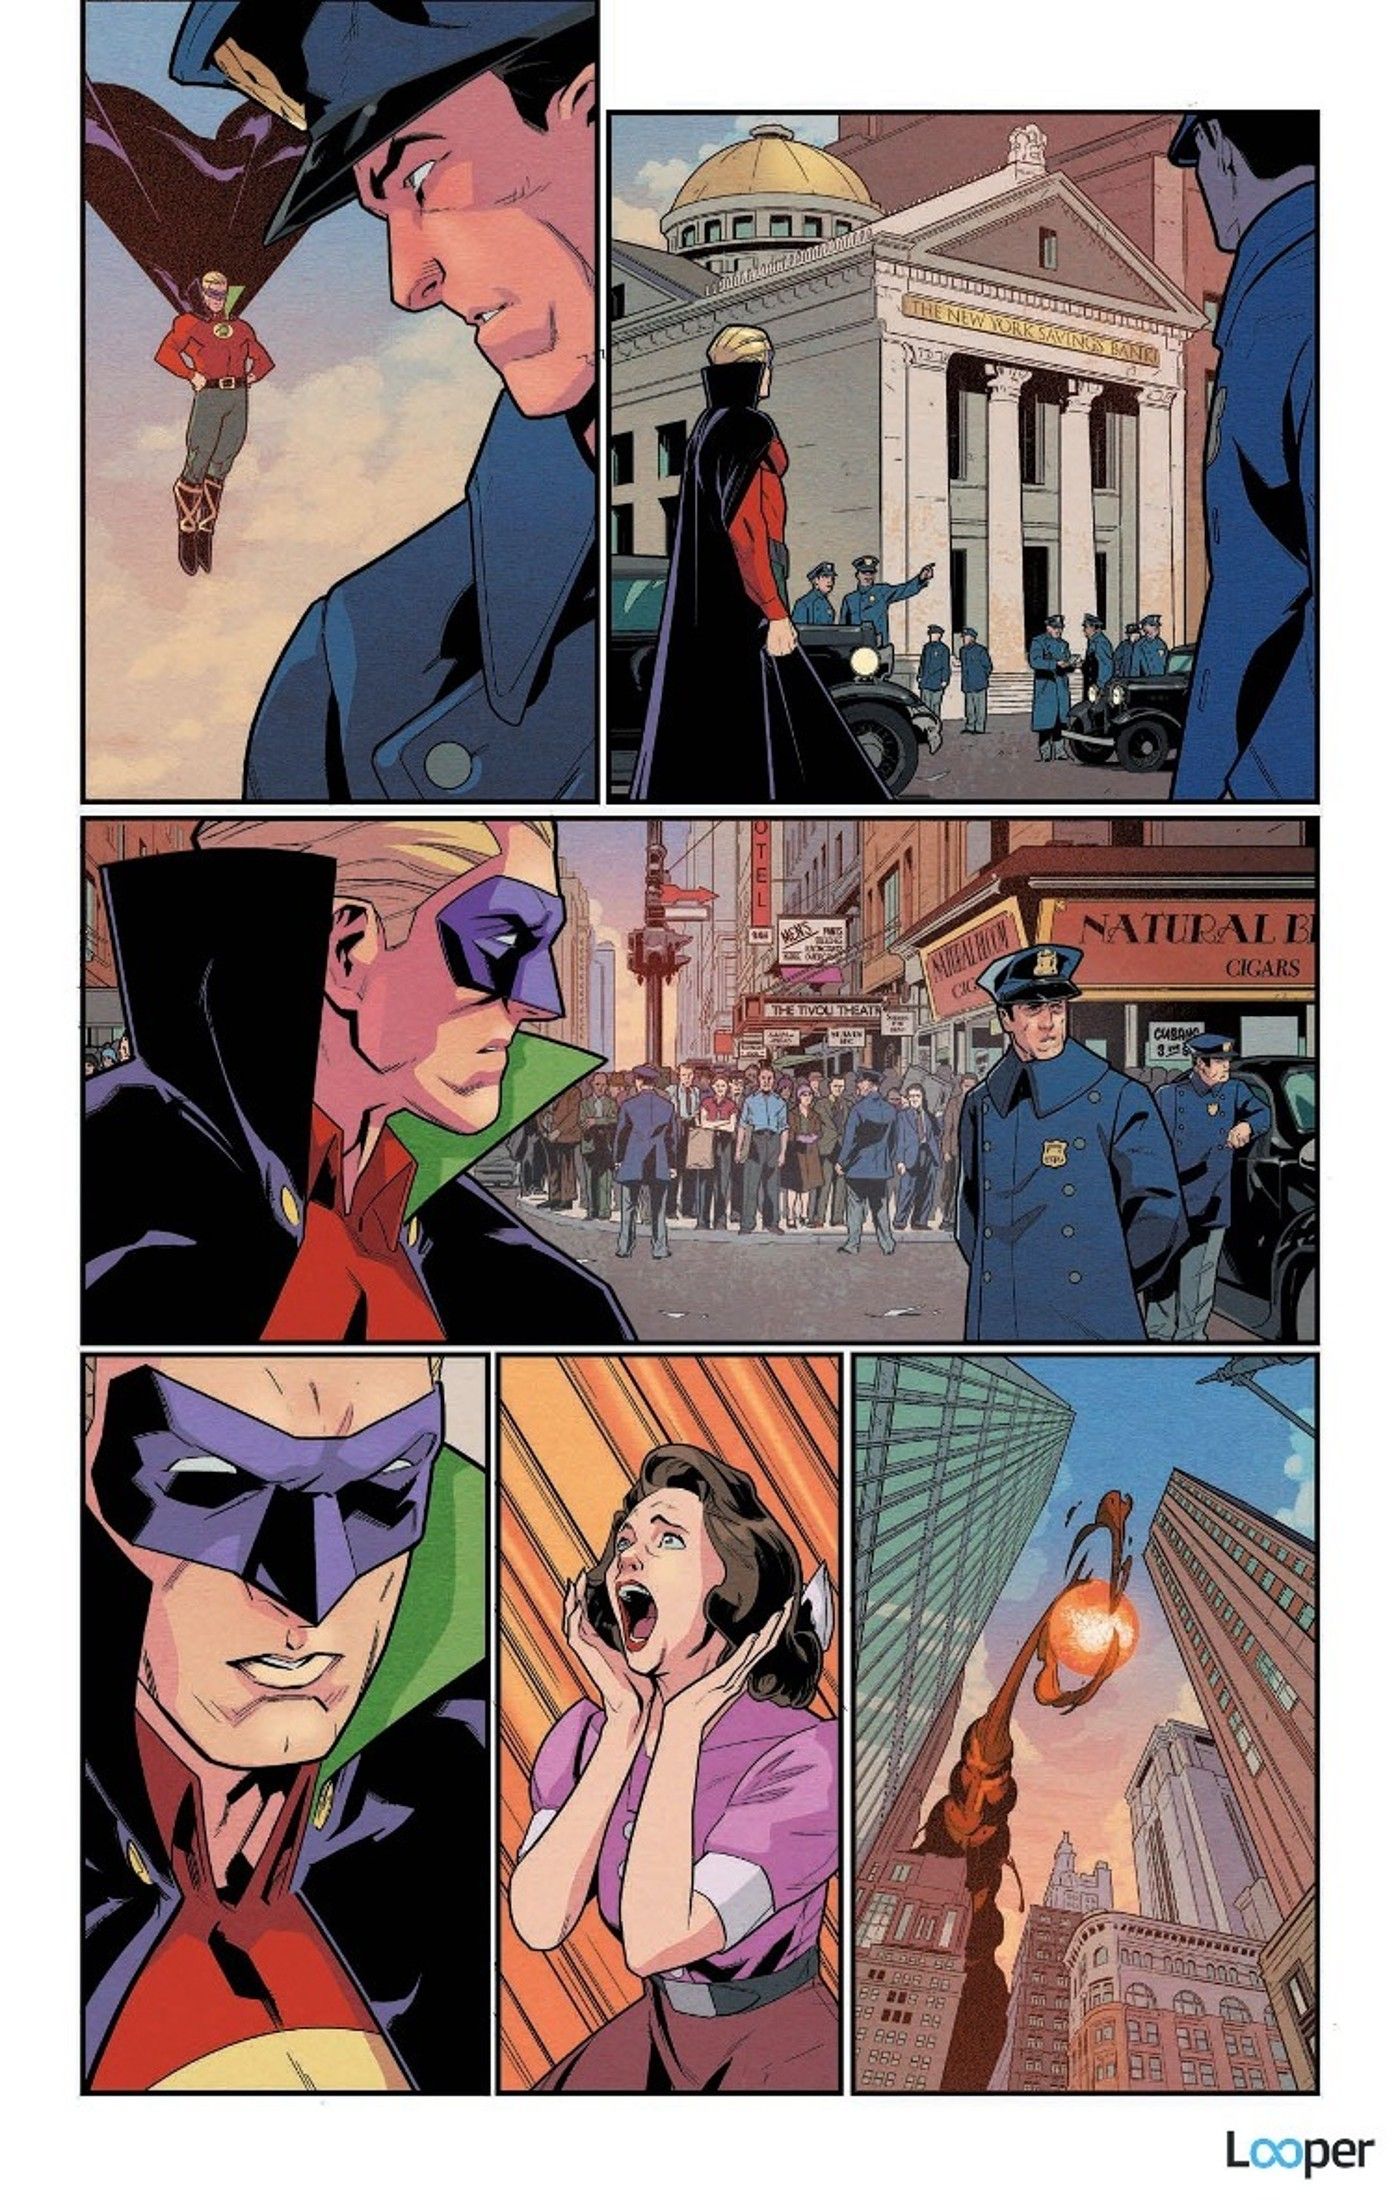 Alan Scott The Green Lantern #1 preview pages